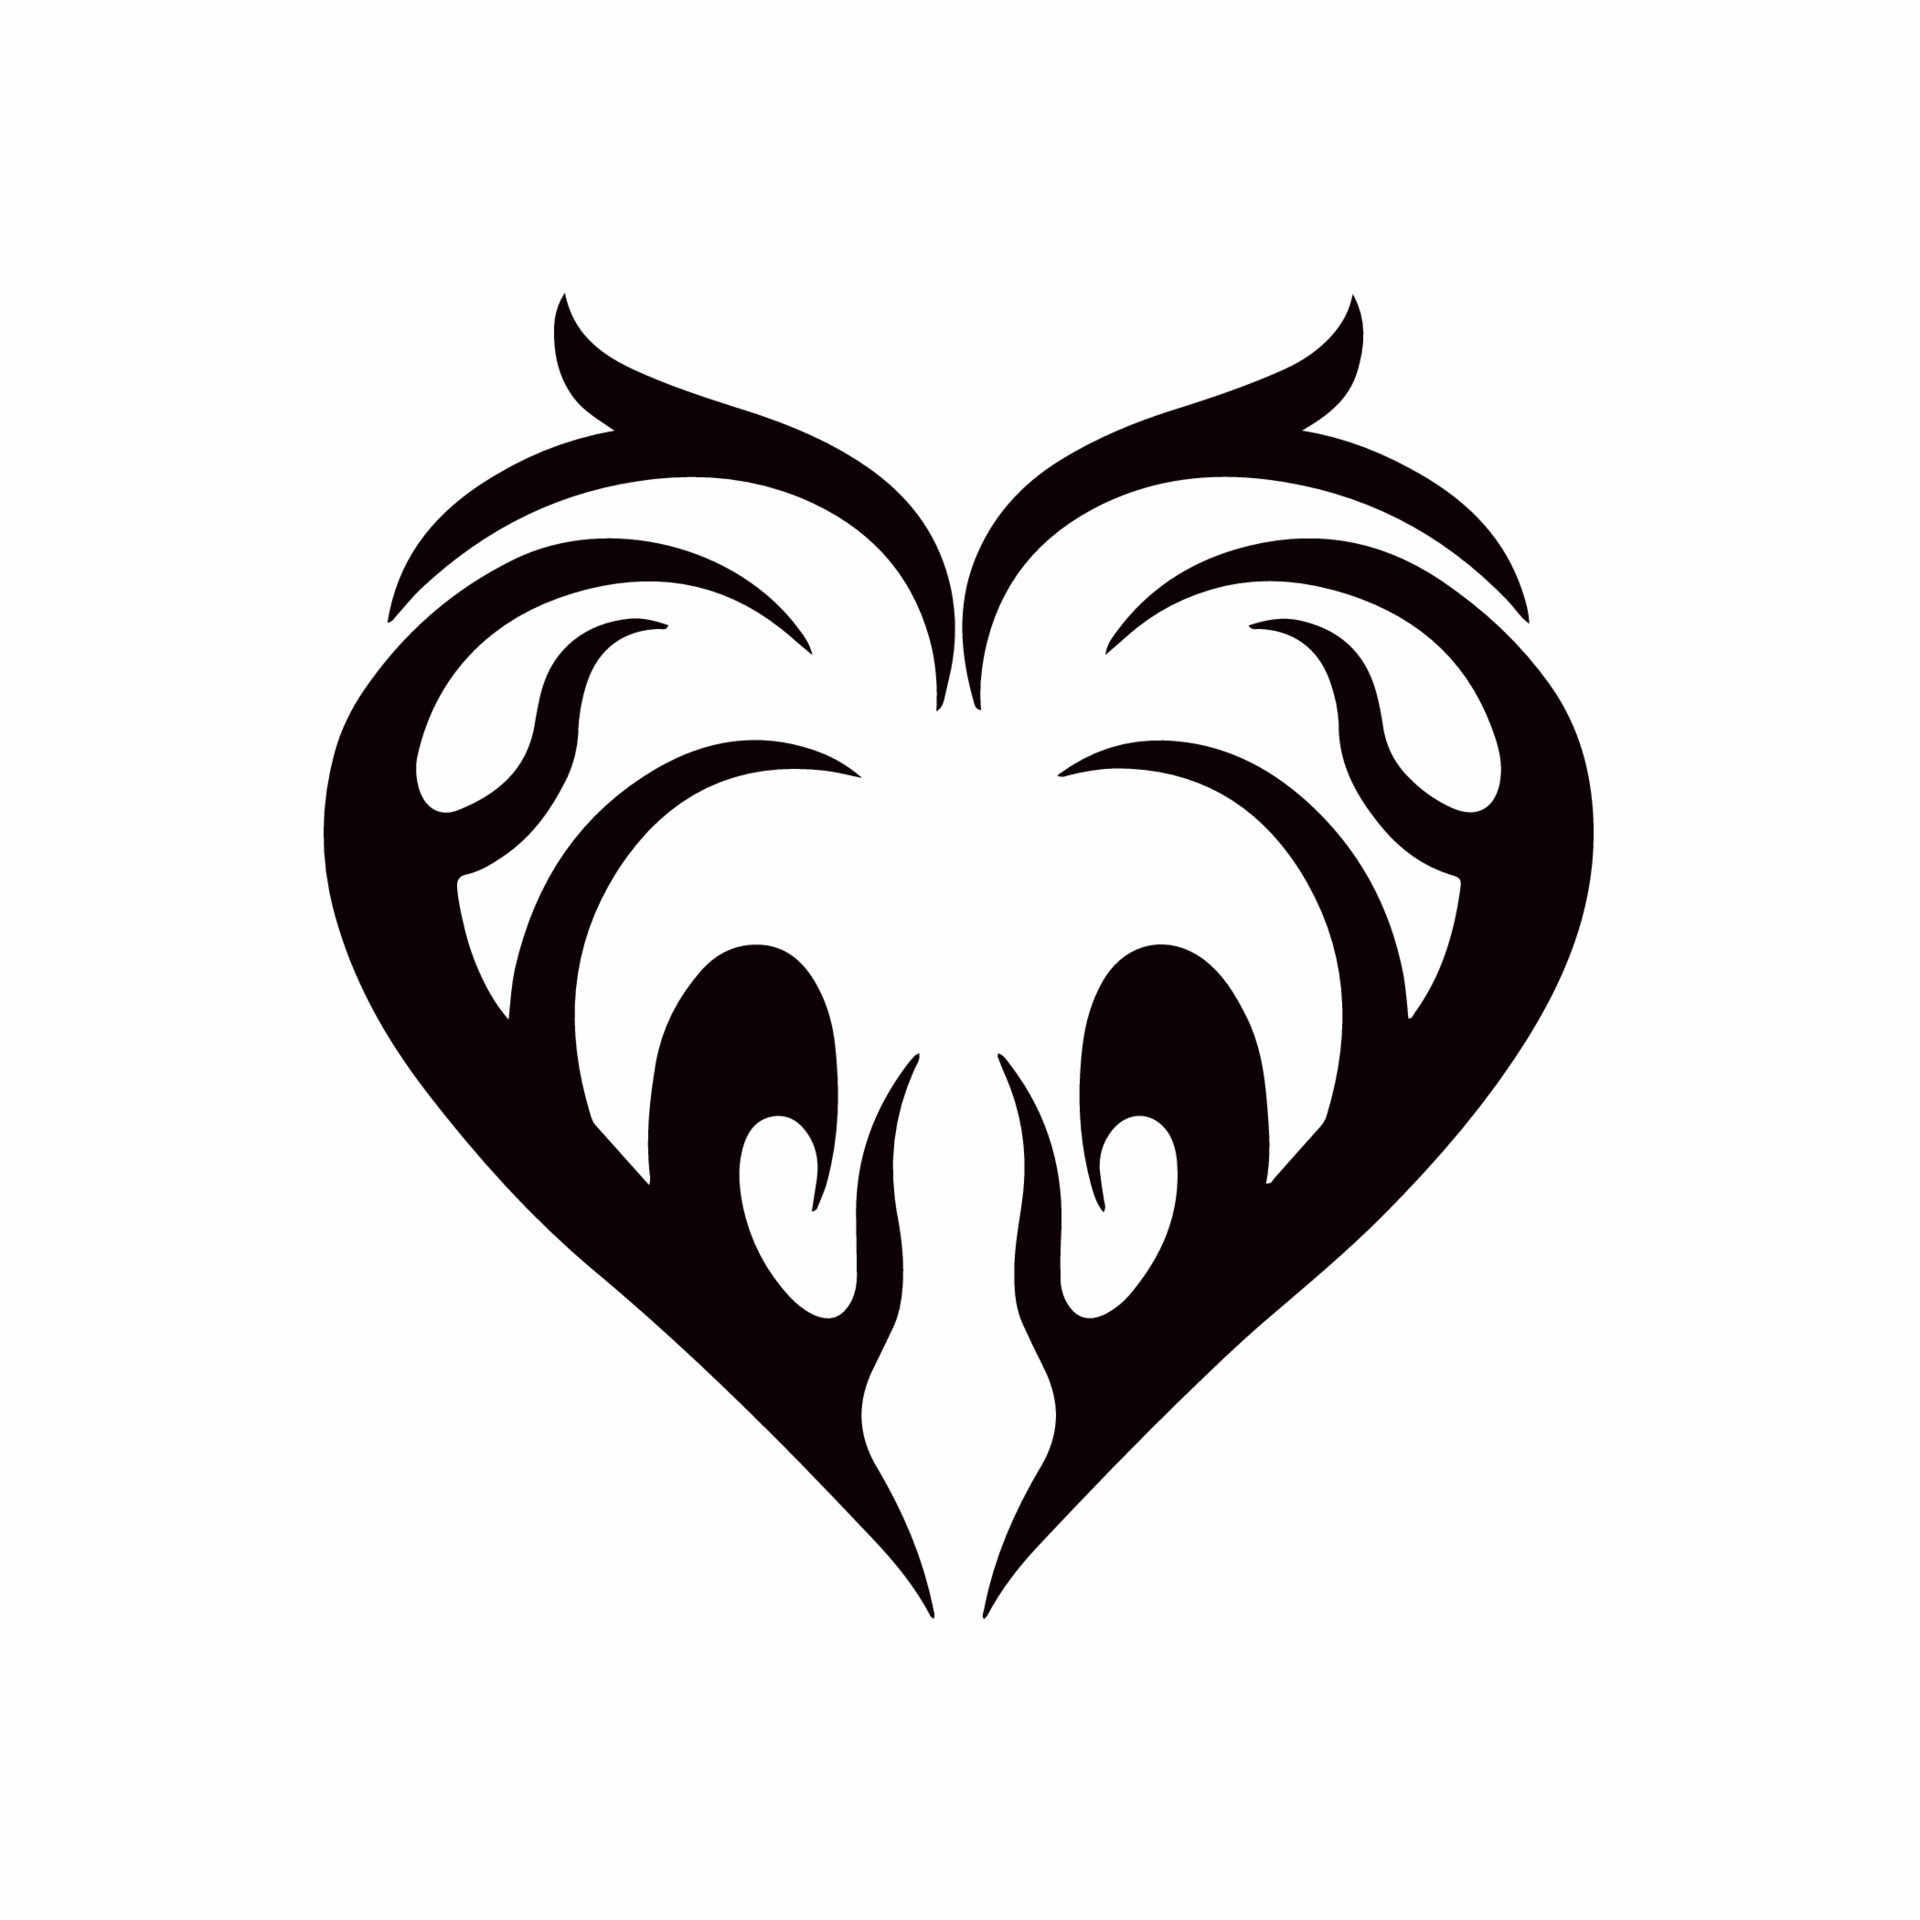 Heart Love Symbol Logo on White Background. Tribal Stencil Tattoo Design  Concept. Flat Vector Illustration. 14398153 Vector Art at Vecteezy